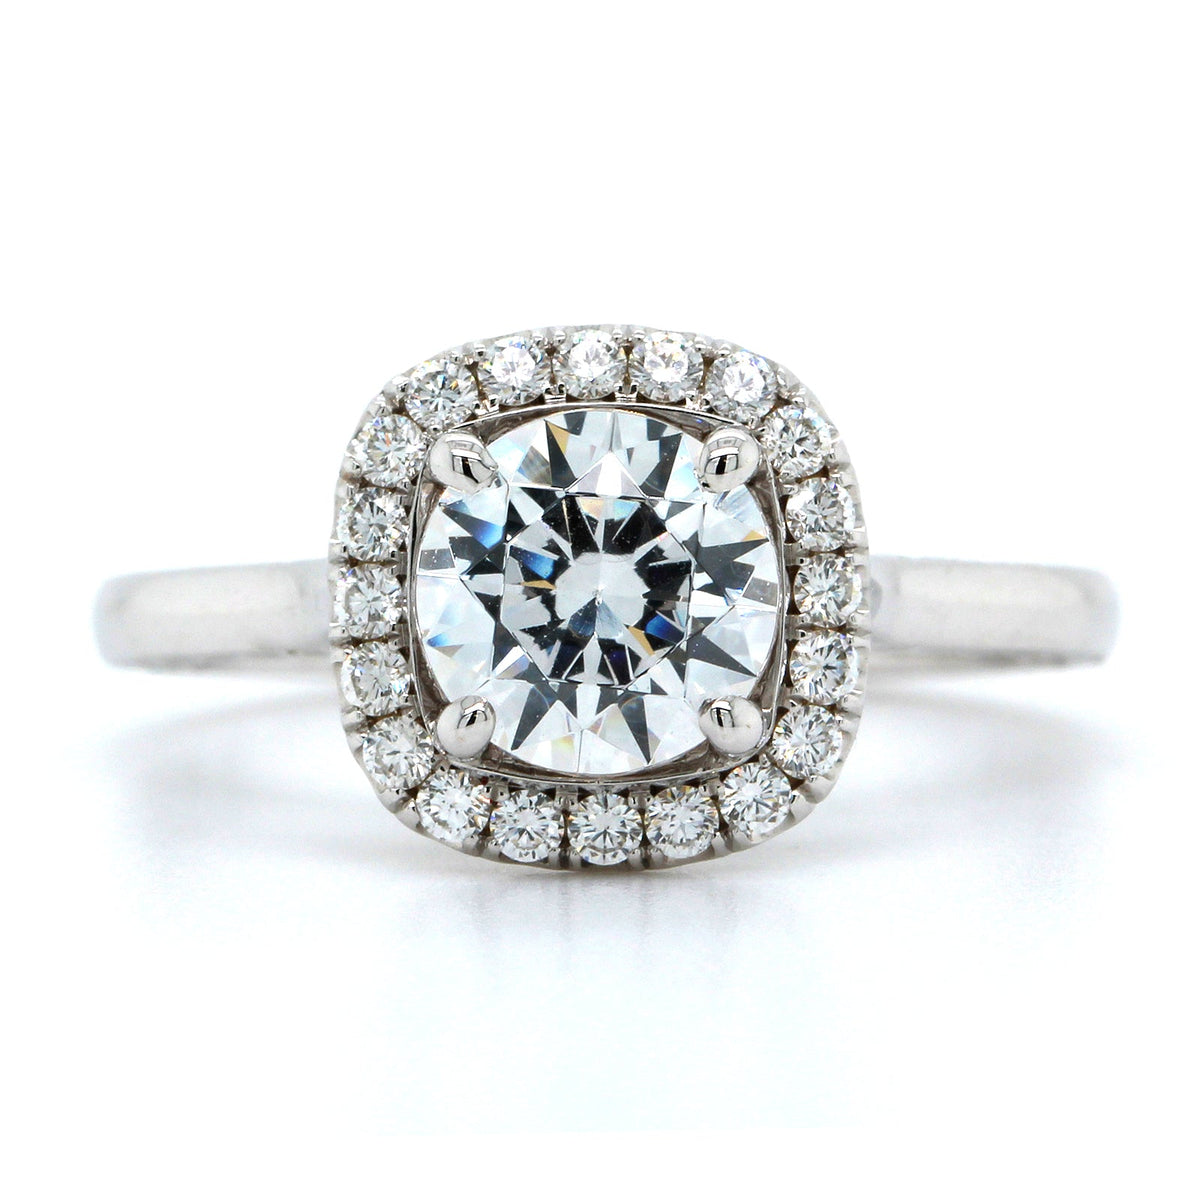 18K White Gold Bezel Set Diamond Halo Engagement Ring Setting, 18k white gold, Long's Jewelers